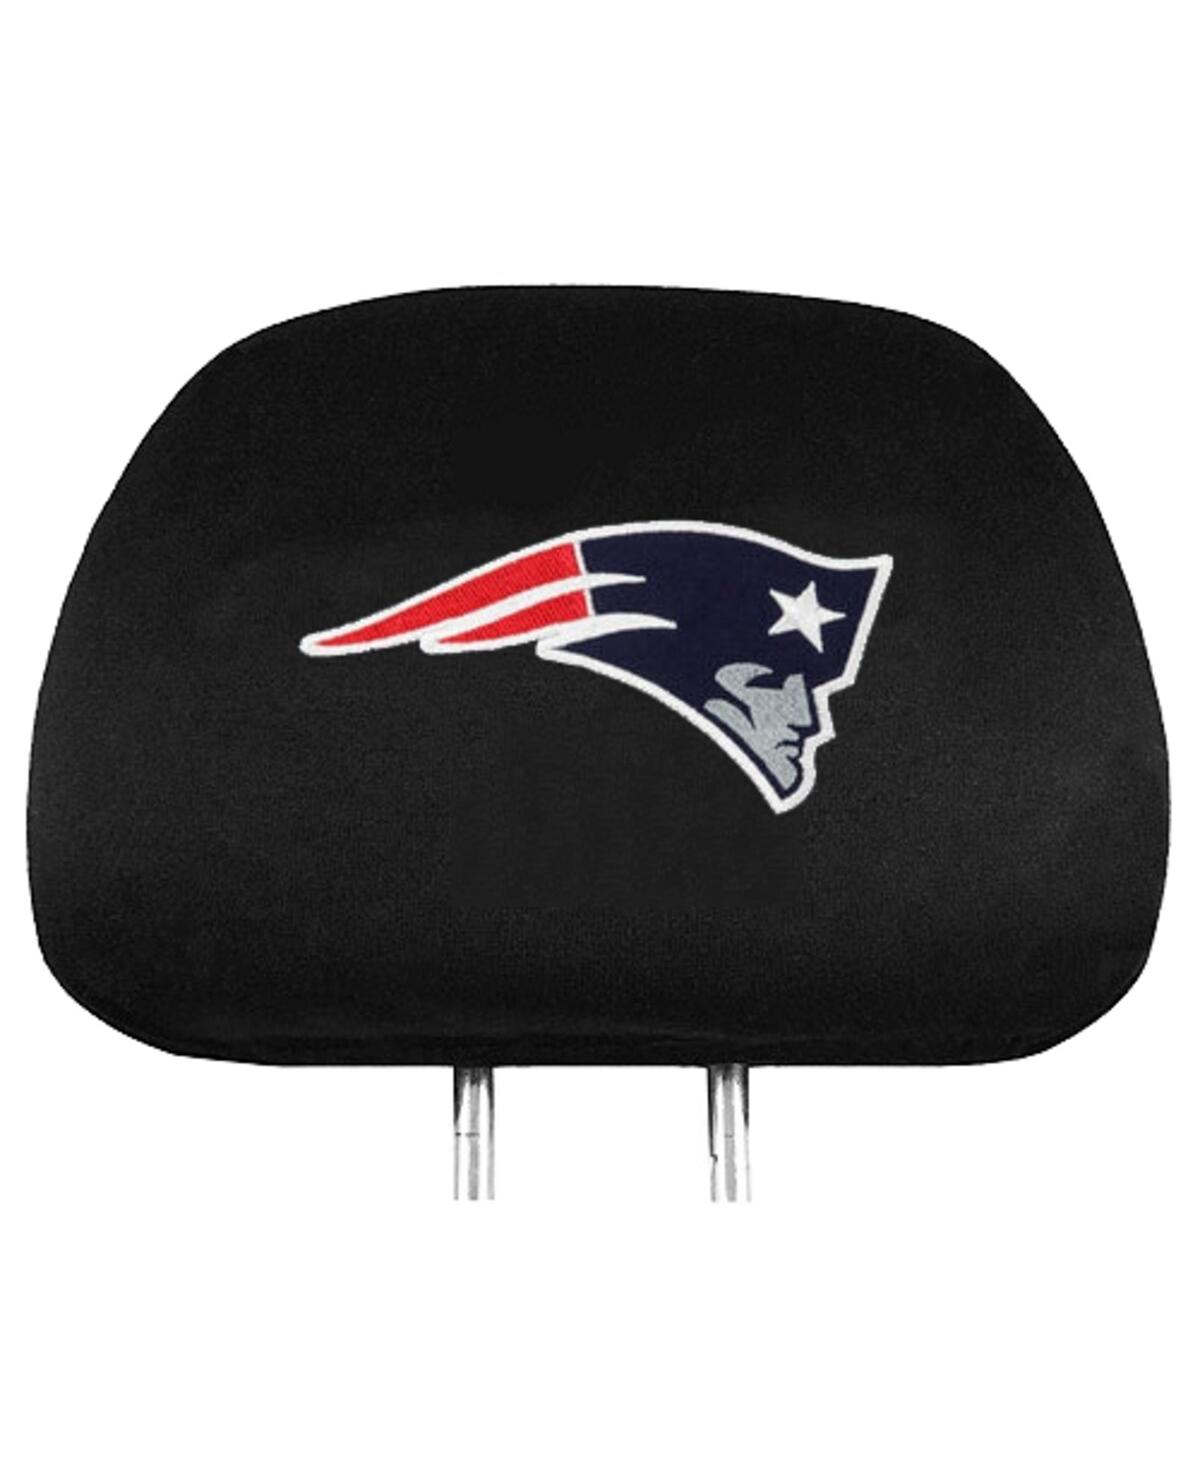 Pro Mark New England Patriots 2-Pack Headrest Covers - Black